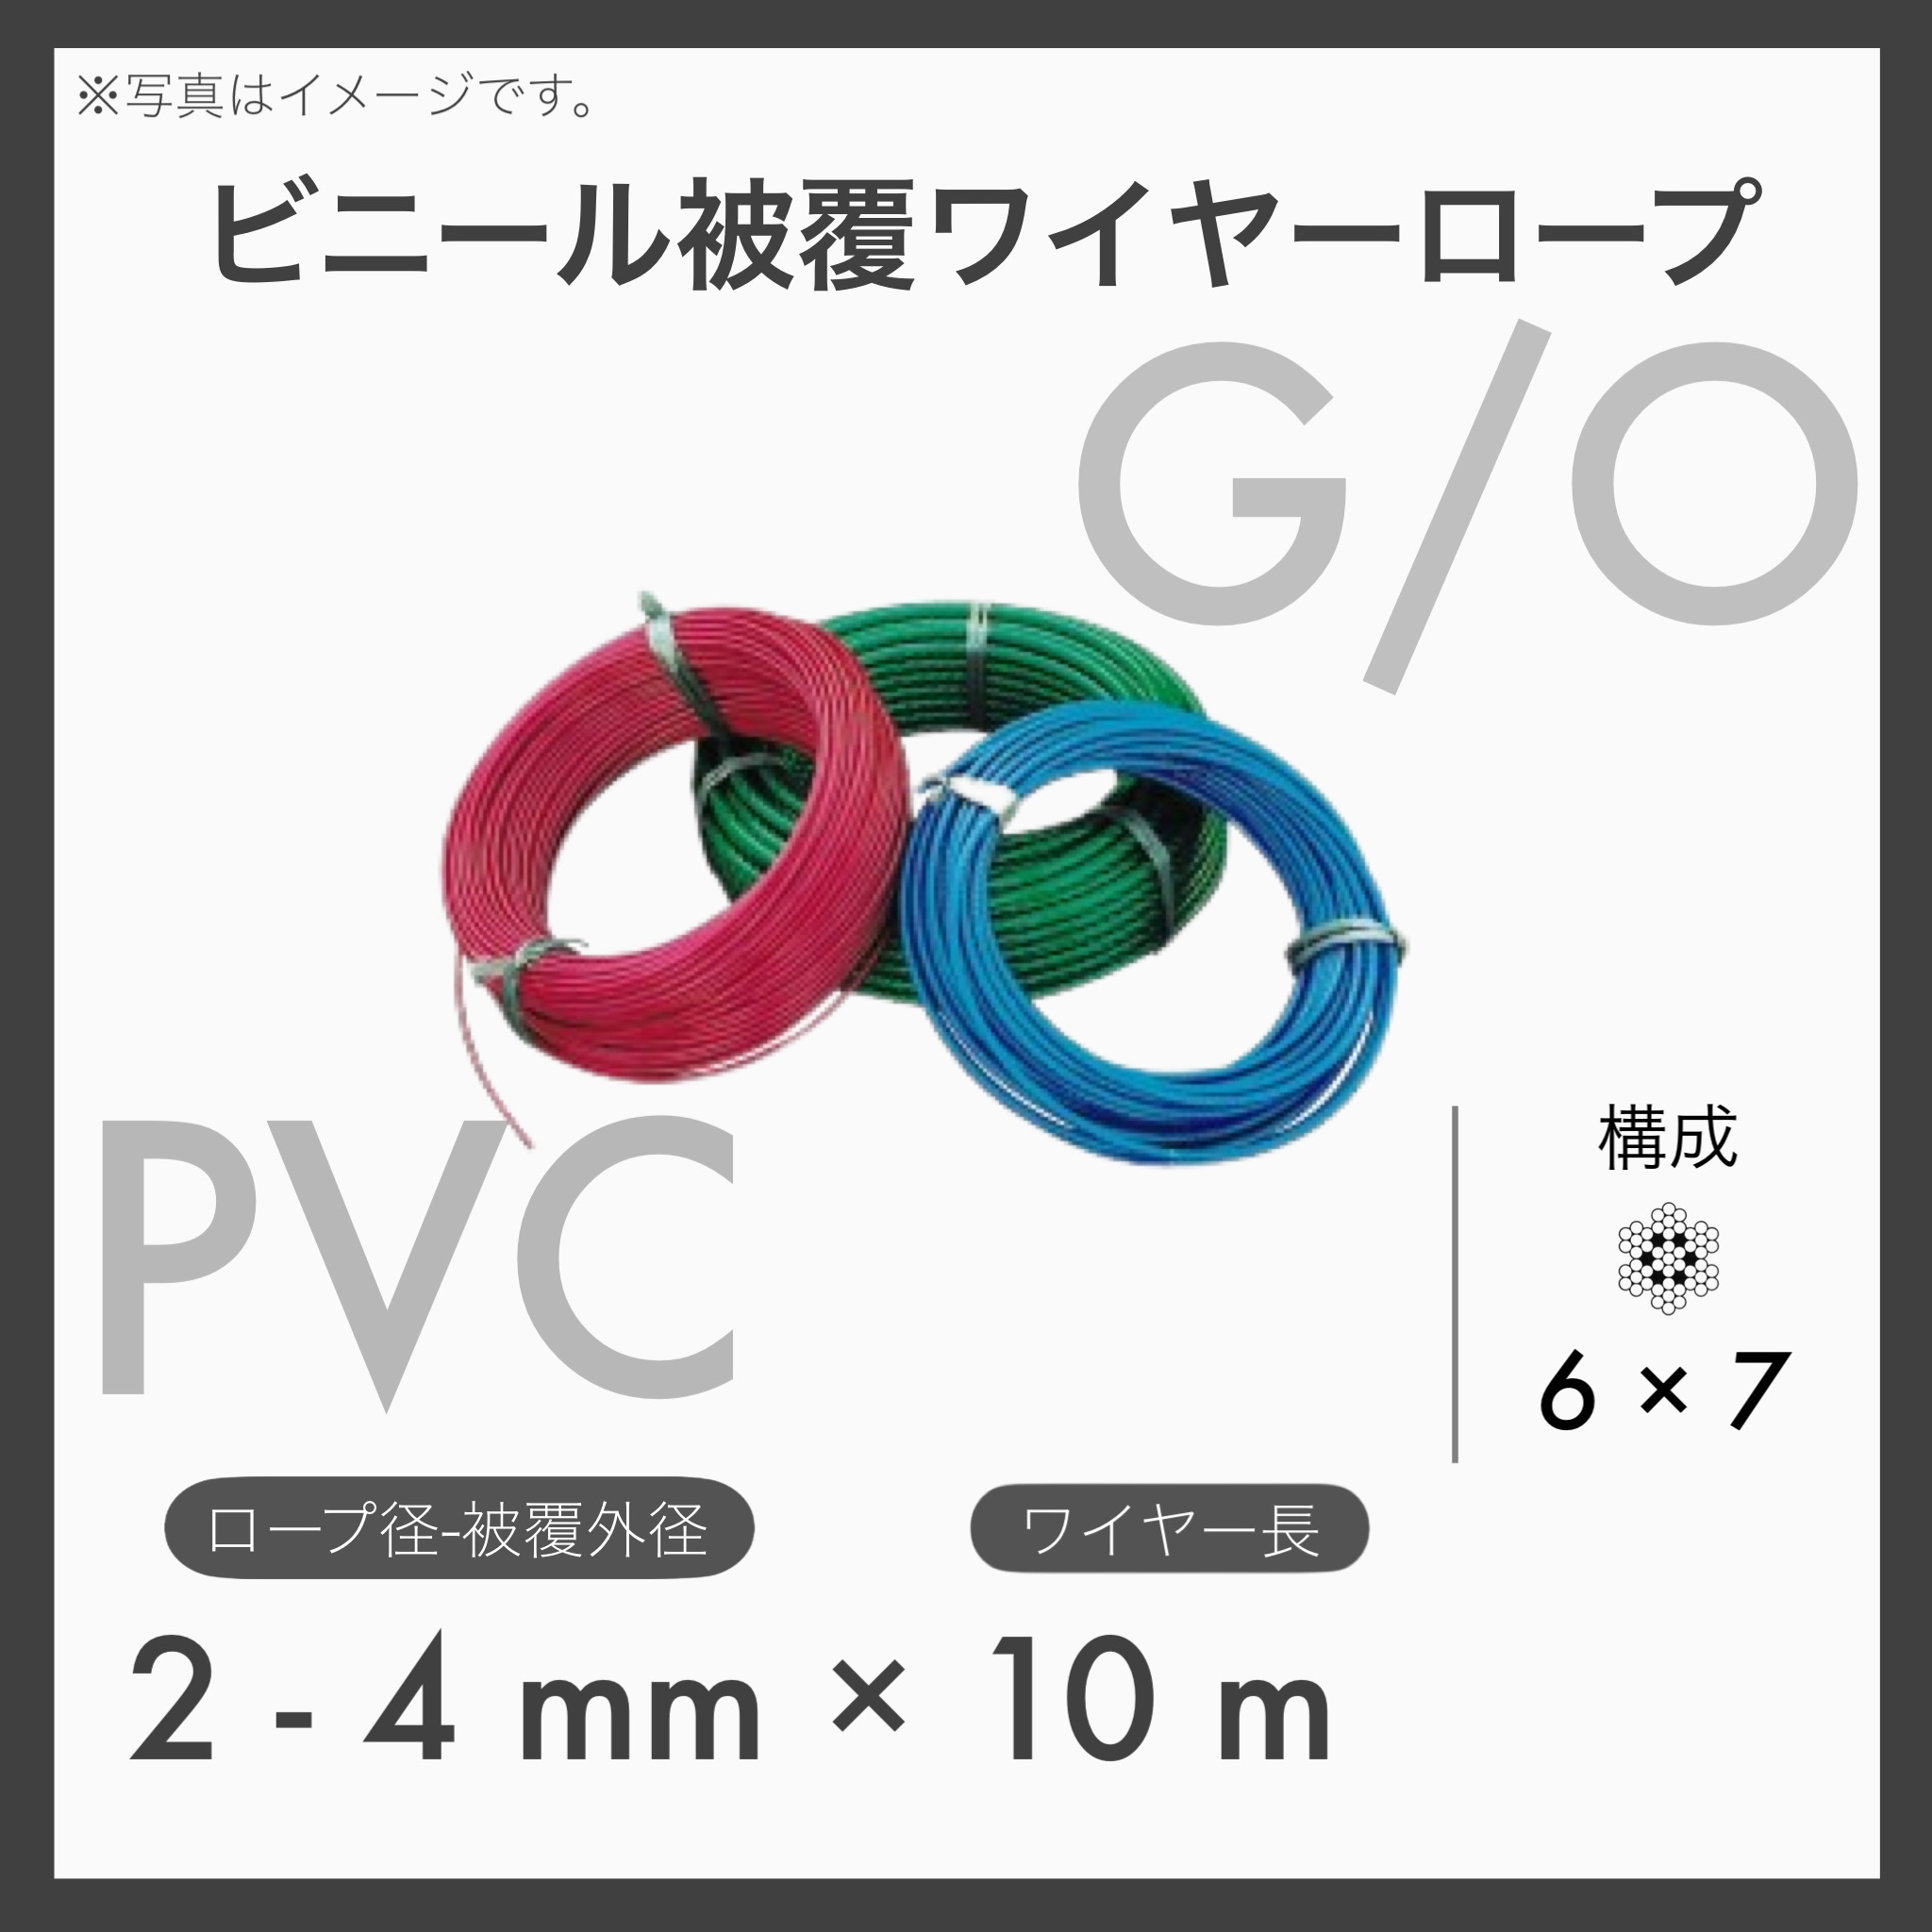 cds-global.dev2.sterlingdigital.co.uk - 日本JIS規格ワイヤロープ6